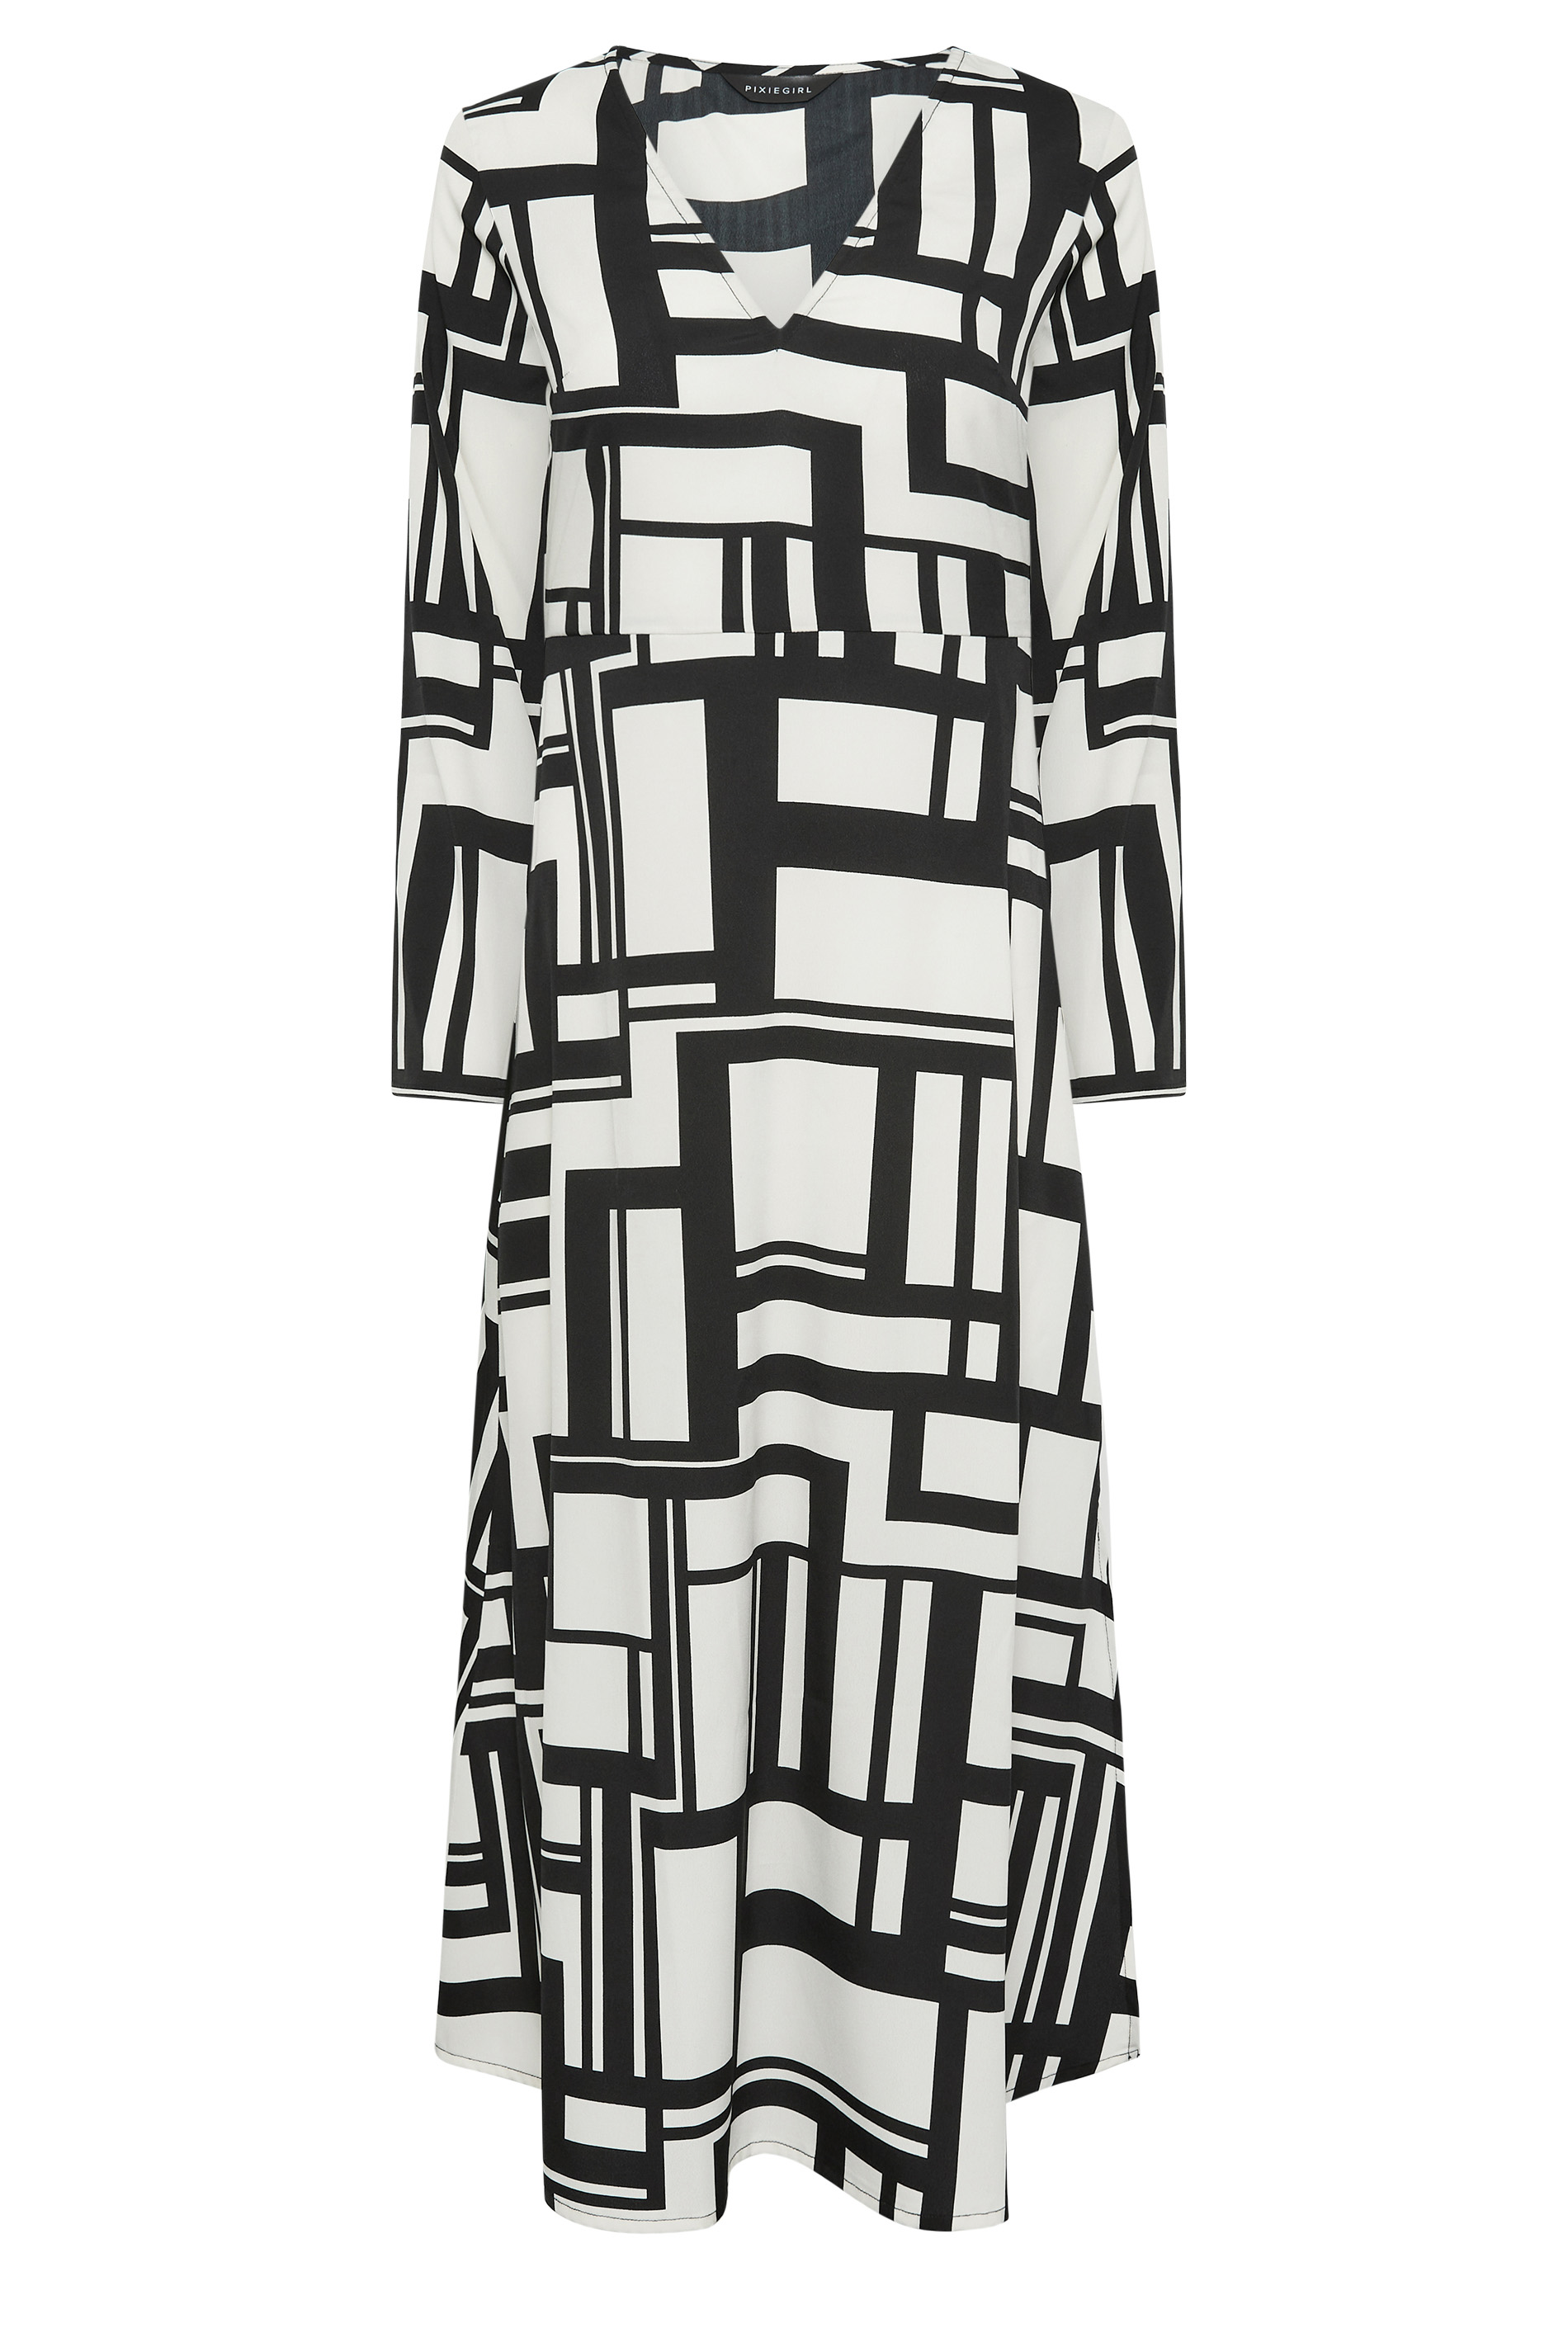 PixieGirl White & Black Abstract Print Dress | PixieGirl